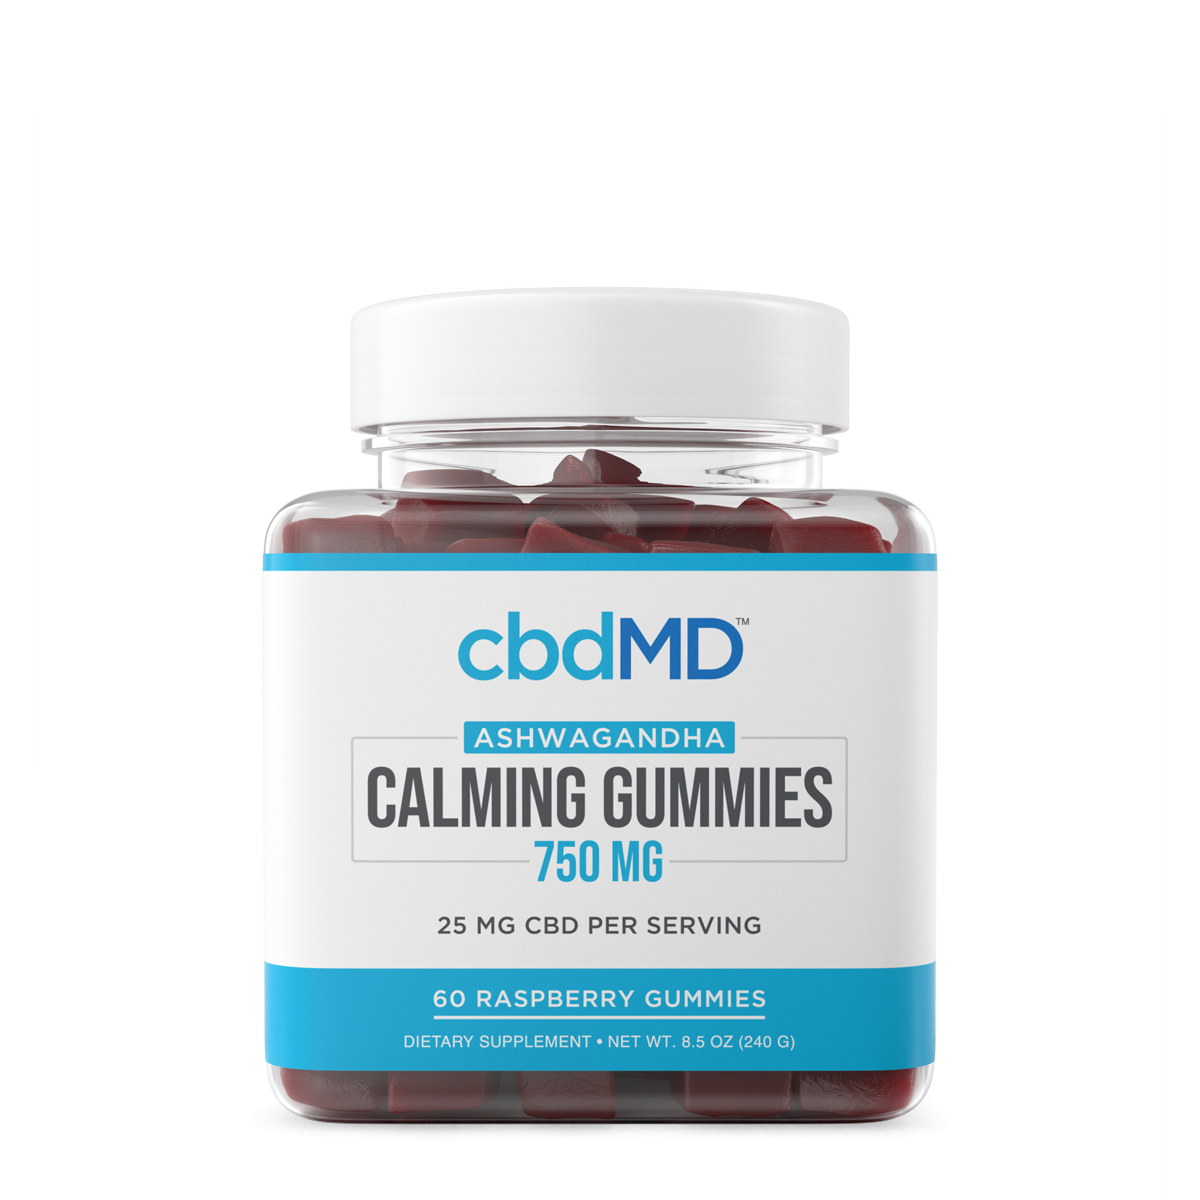 cbdmd calming cbd gummies ashwaganda 750mg